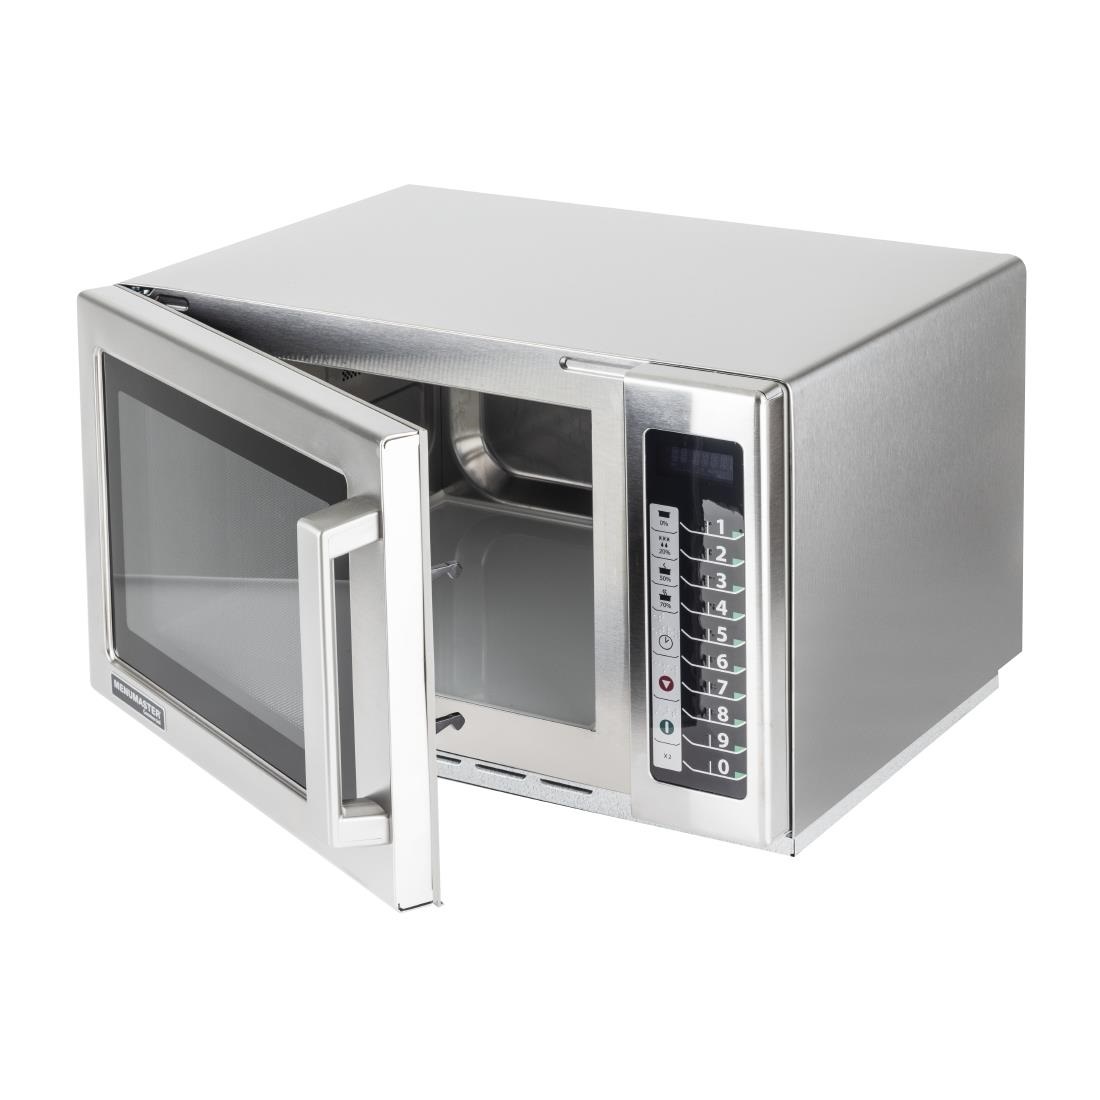 Menumaster RCS511TS Medium Duty Commercial Microwave Oven (CM744)